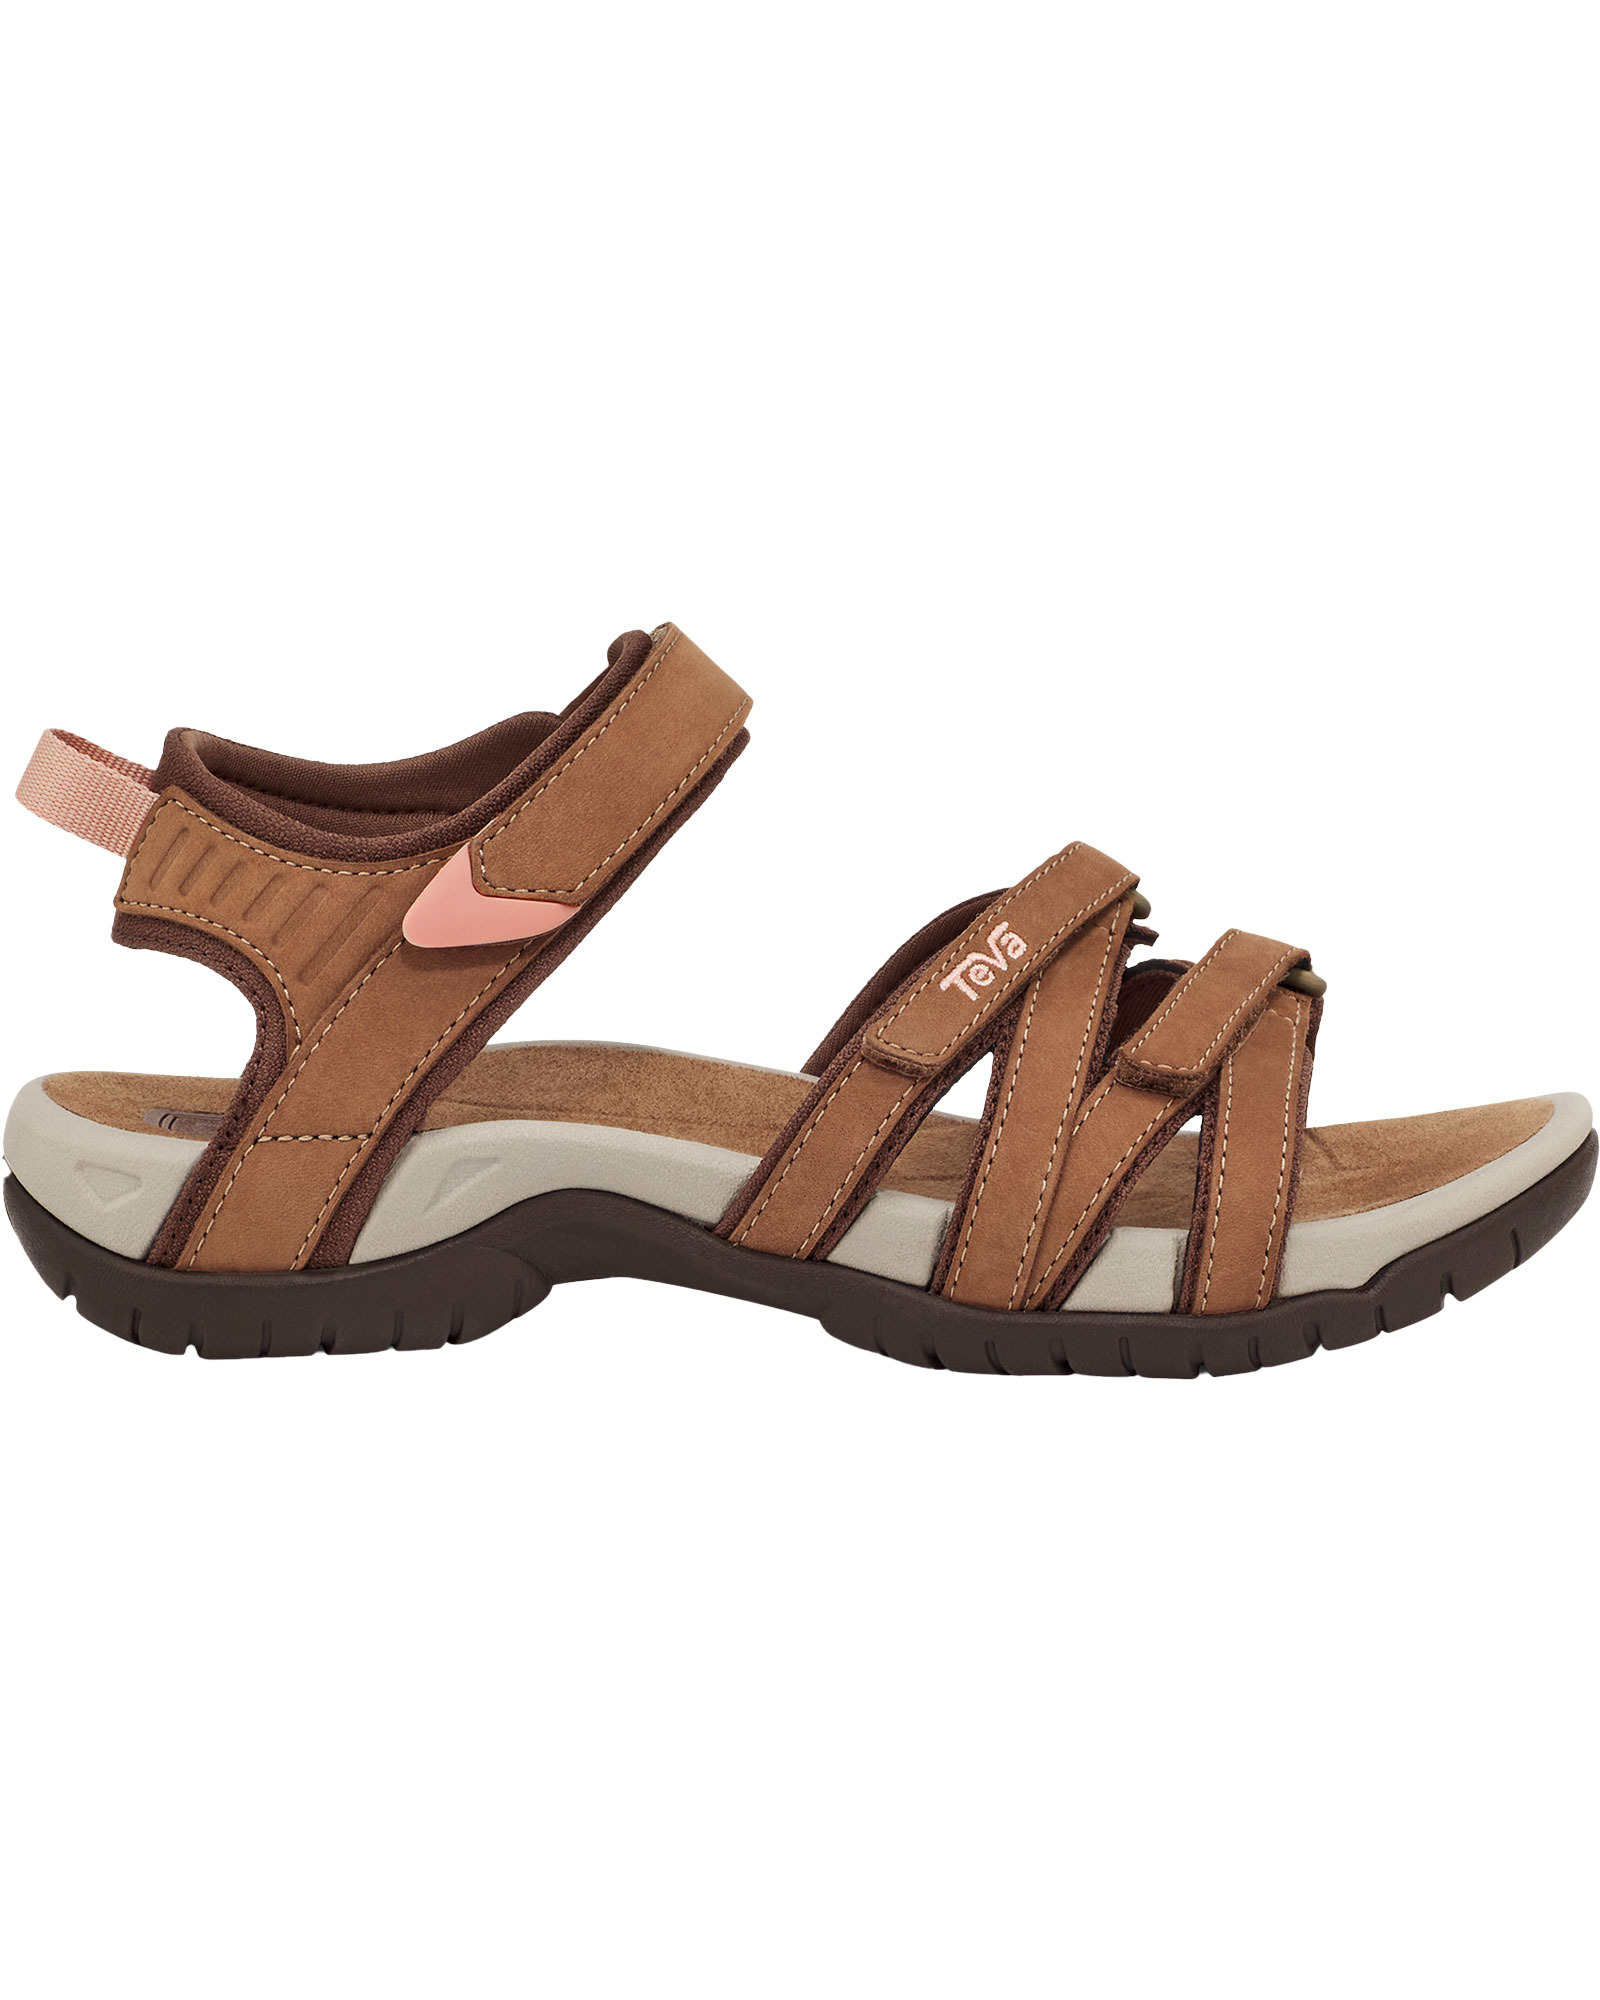 Teva Tirra Leather Women’s Sandals - Honey Brown UK 4